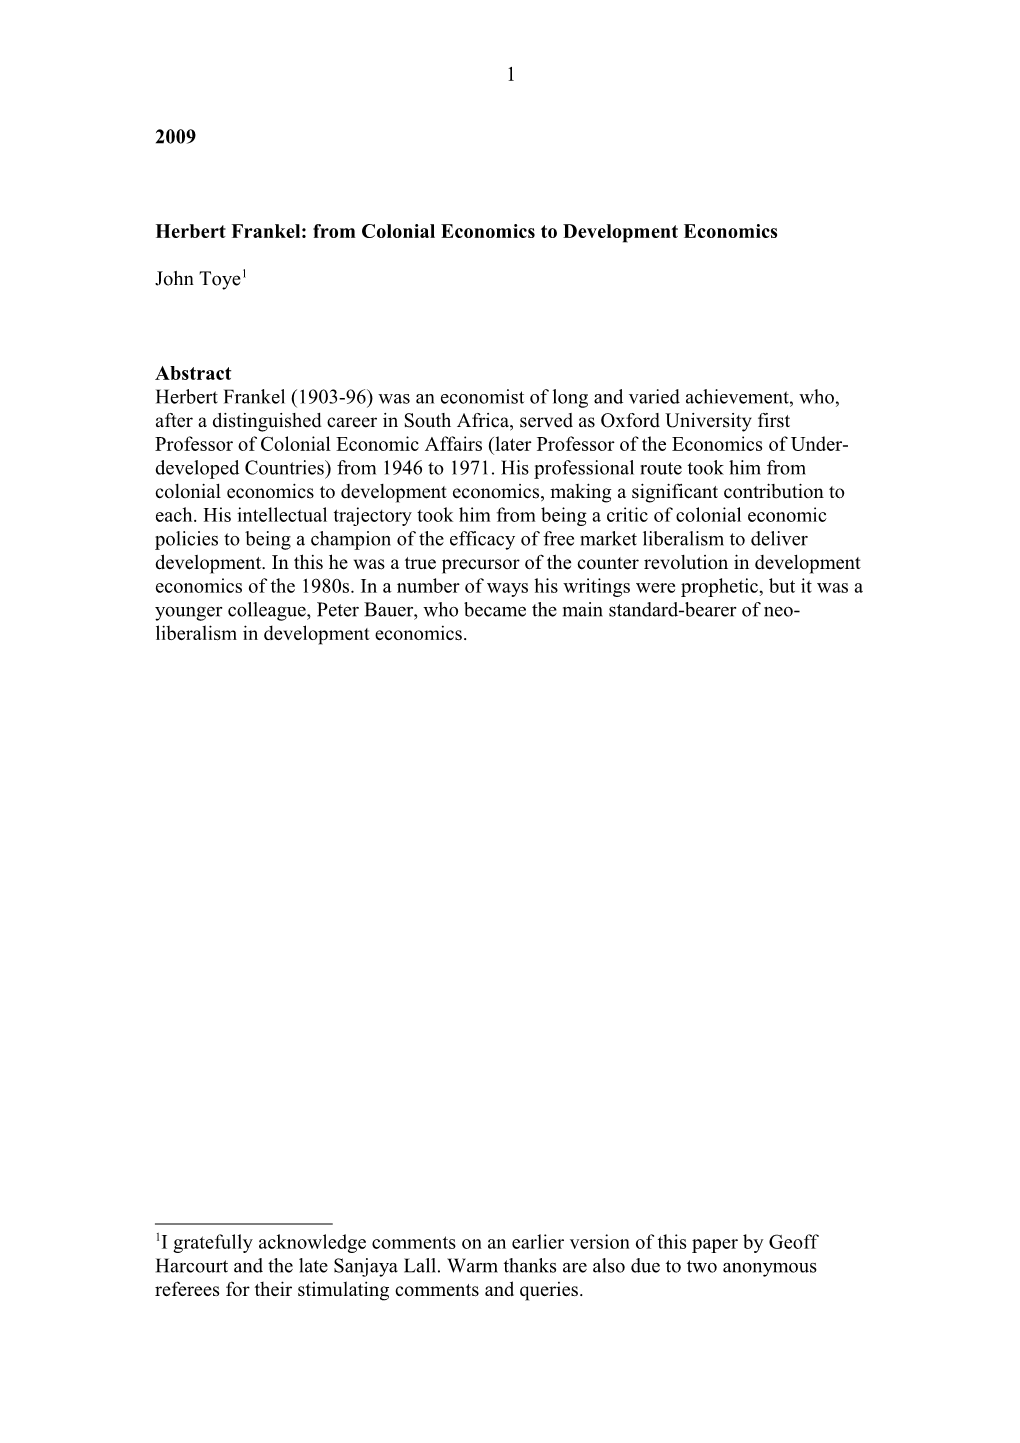 Herbert Frankel: from Colonial Economics to Development Economics